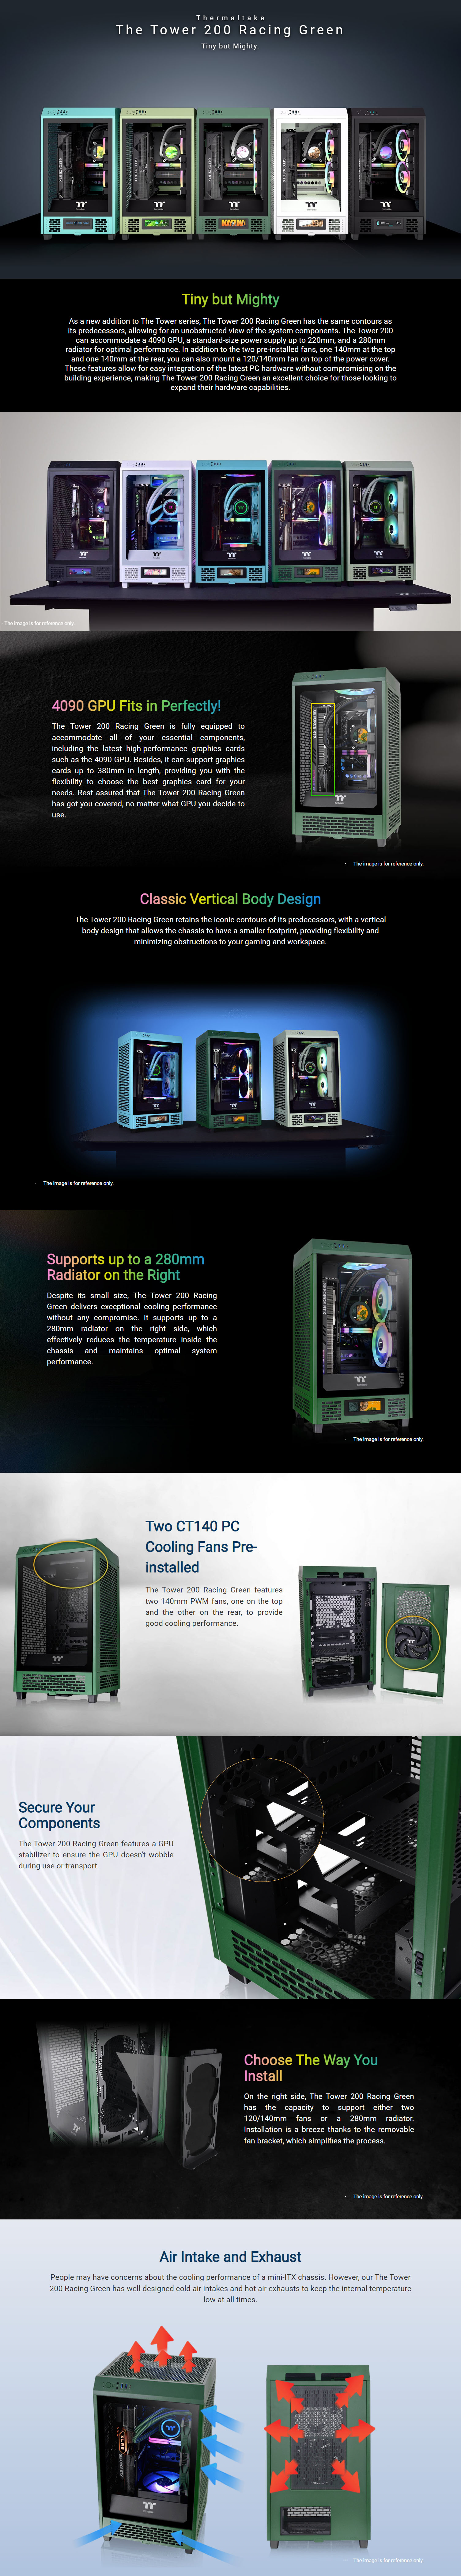 Thermaltake-Cases-Thermaltake-Tower-200-Mini-TG-Mini-ITX-Case-Racing-Green-1